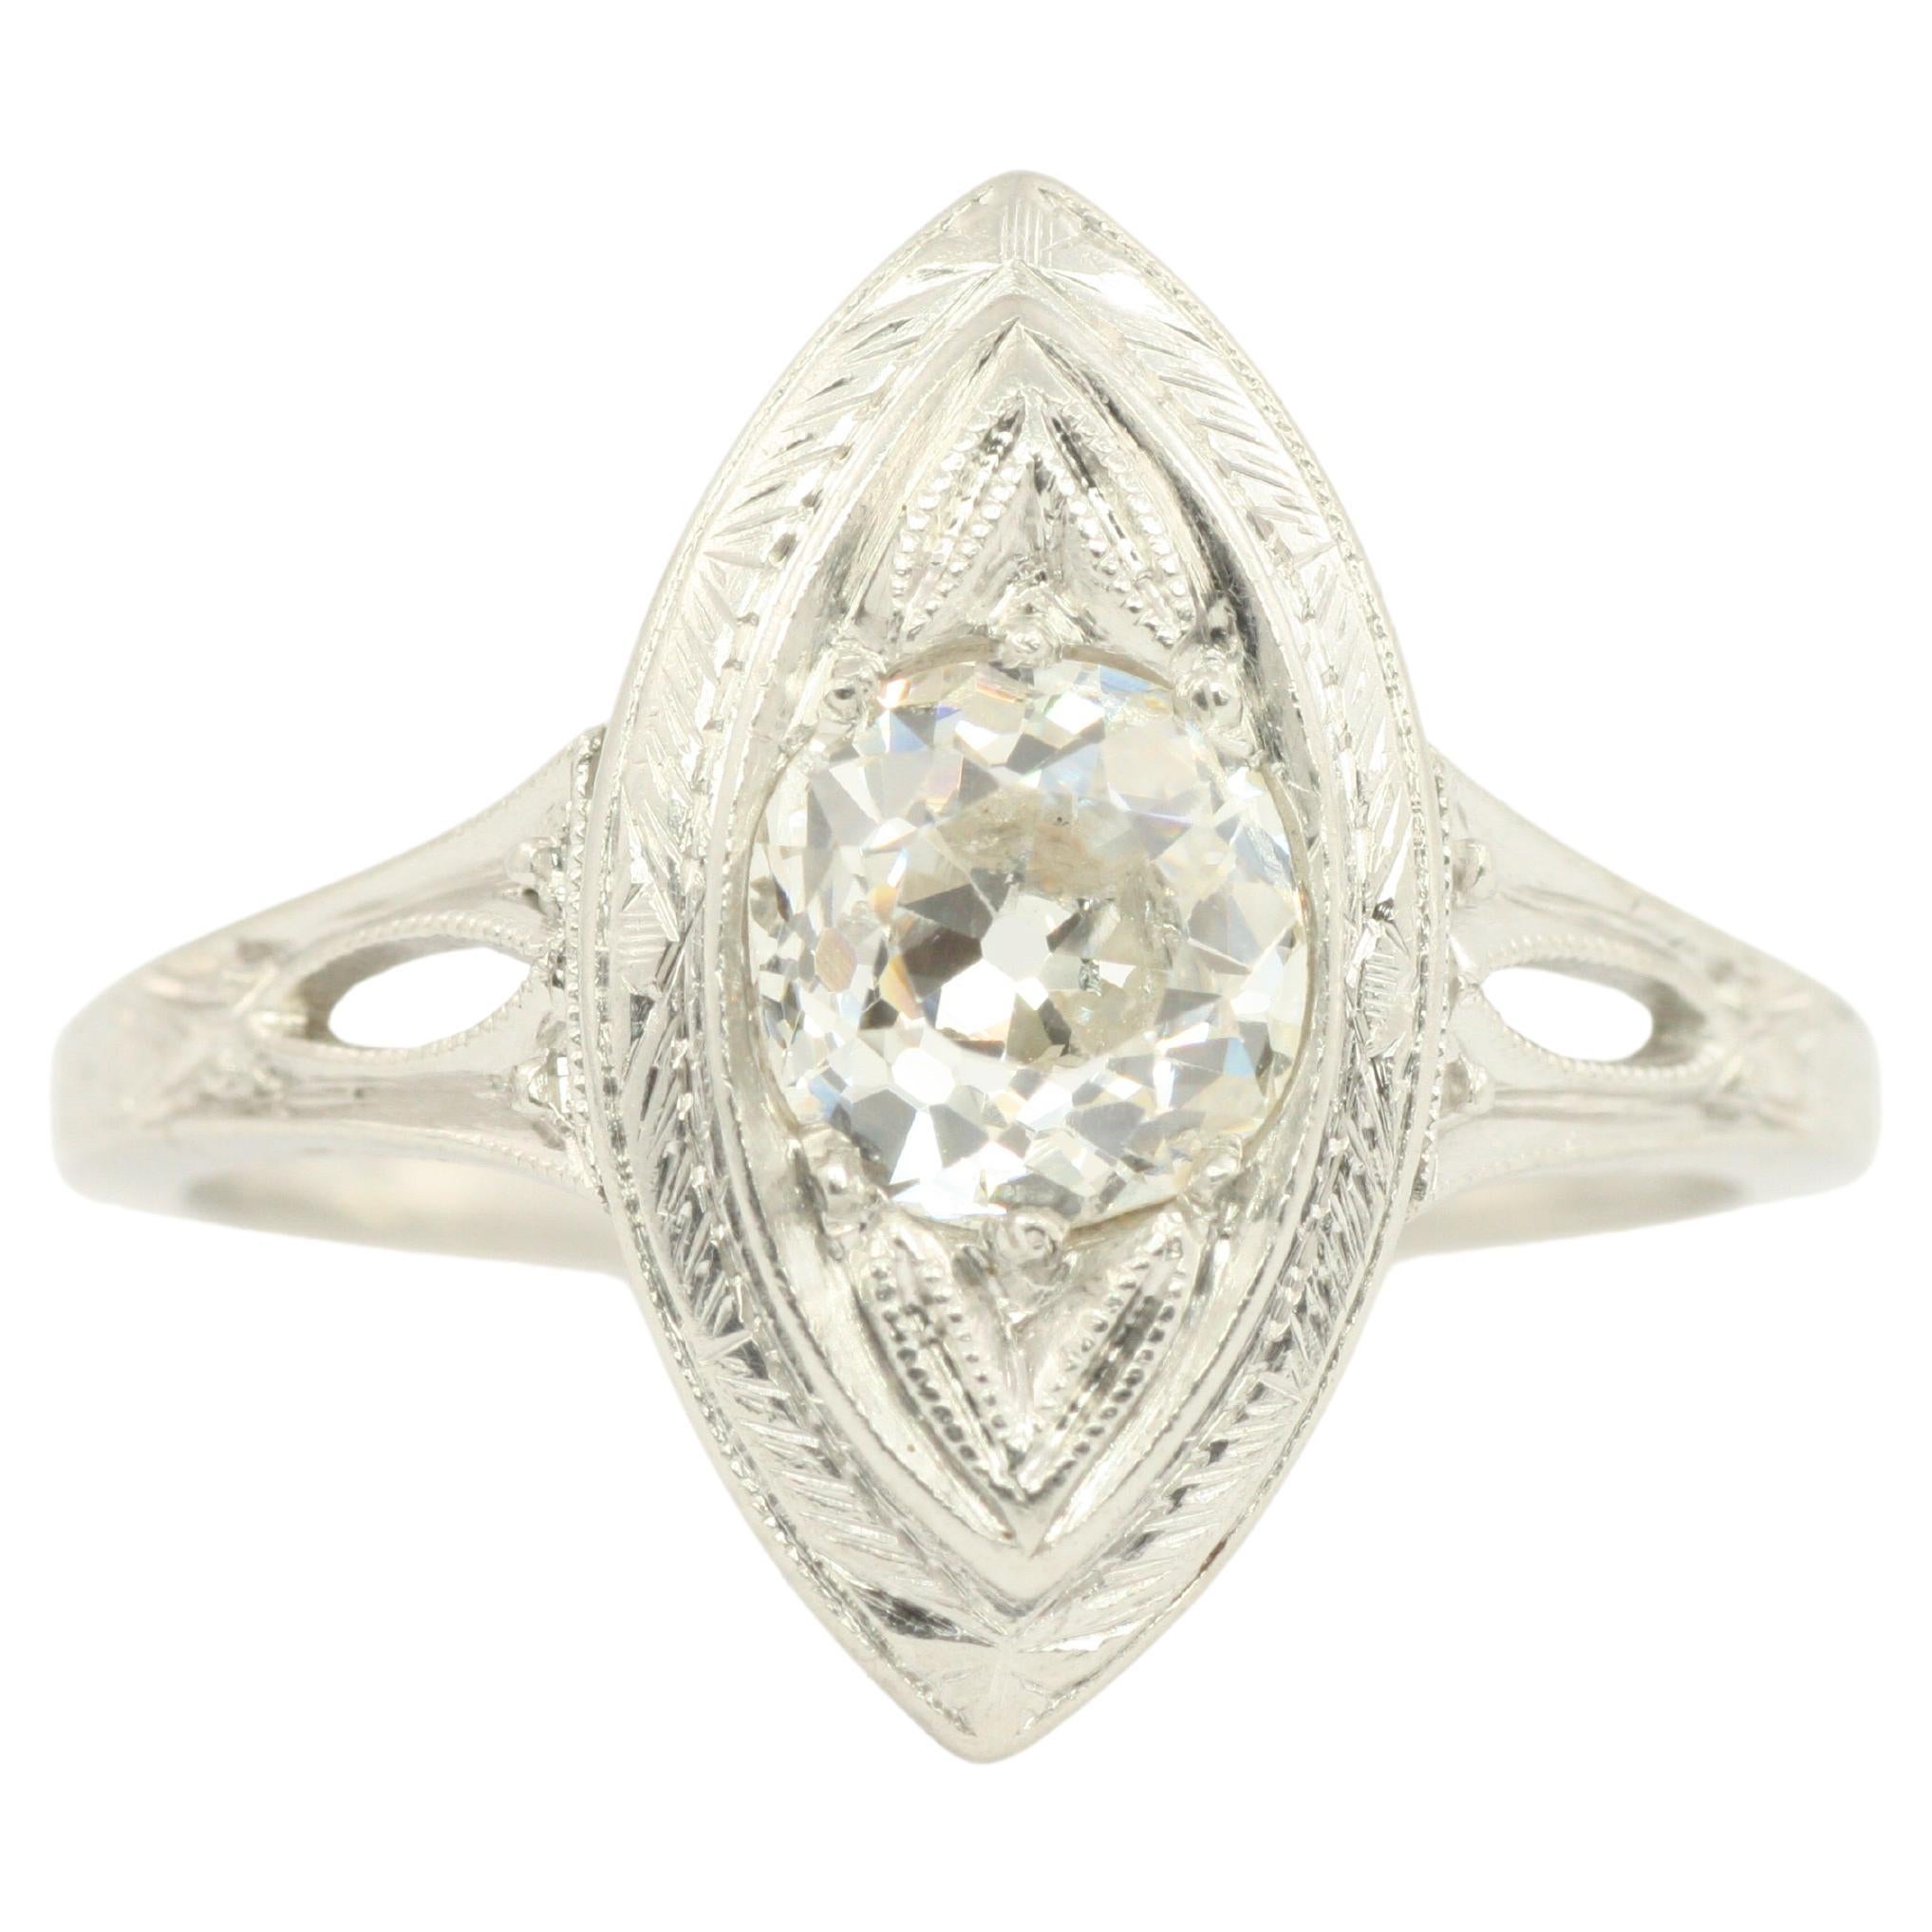 0.85 Carat Old Mine Cut Diamond 1920s Filigree Art Deco Platinum Engagement Ring